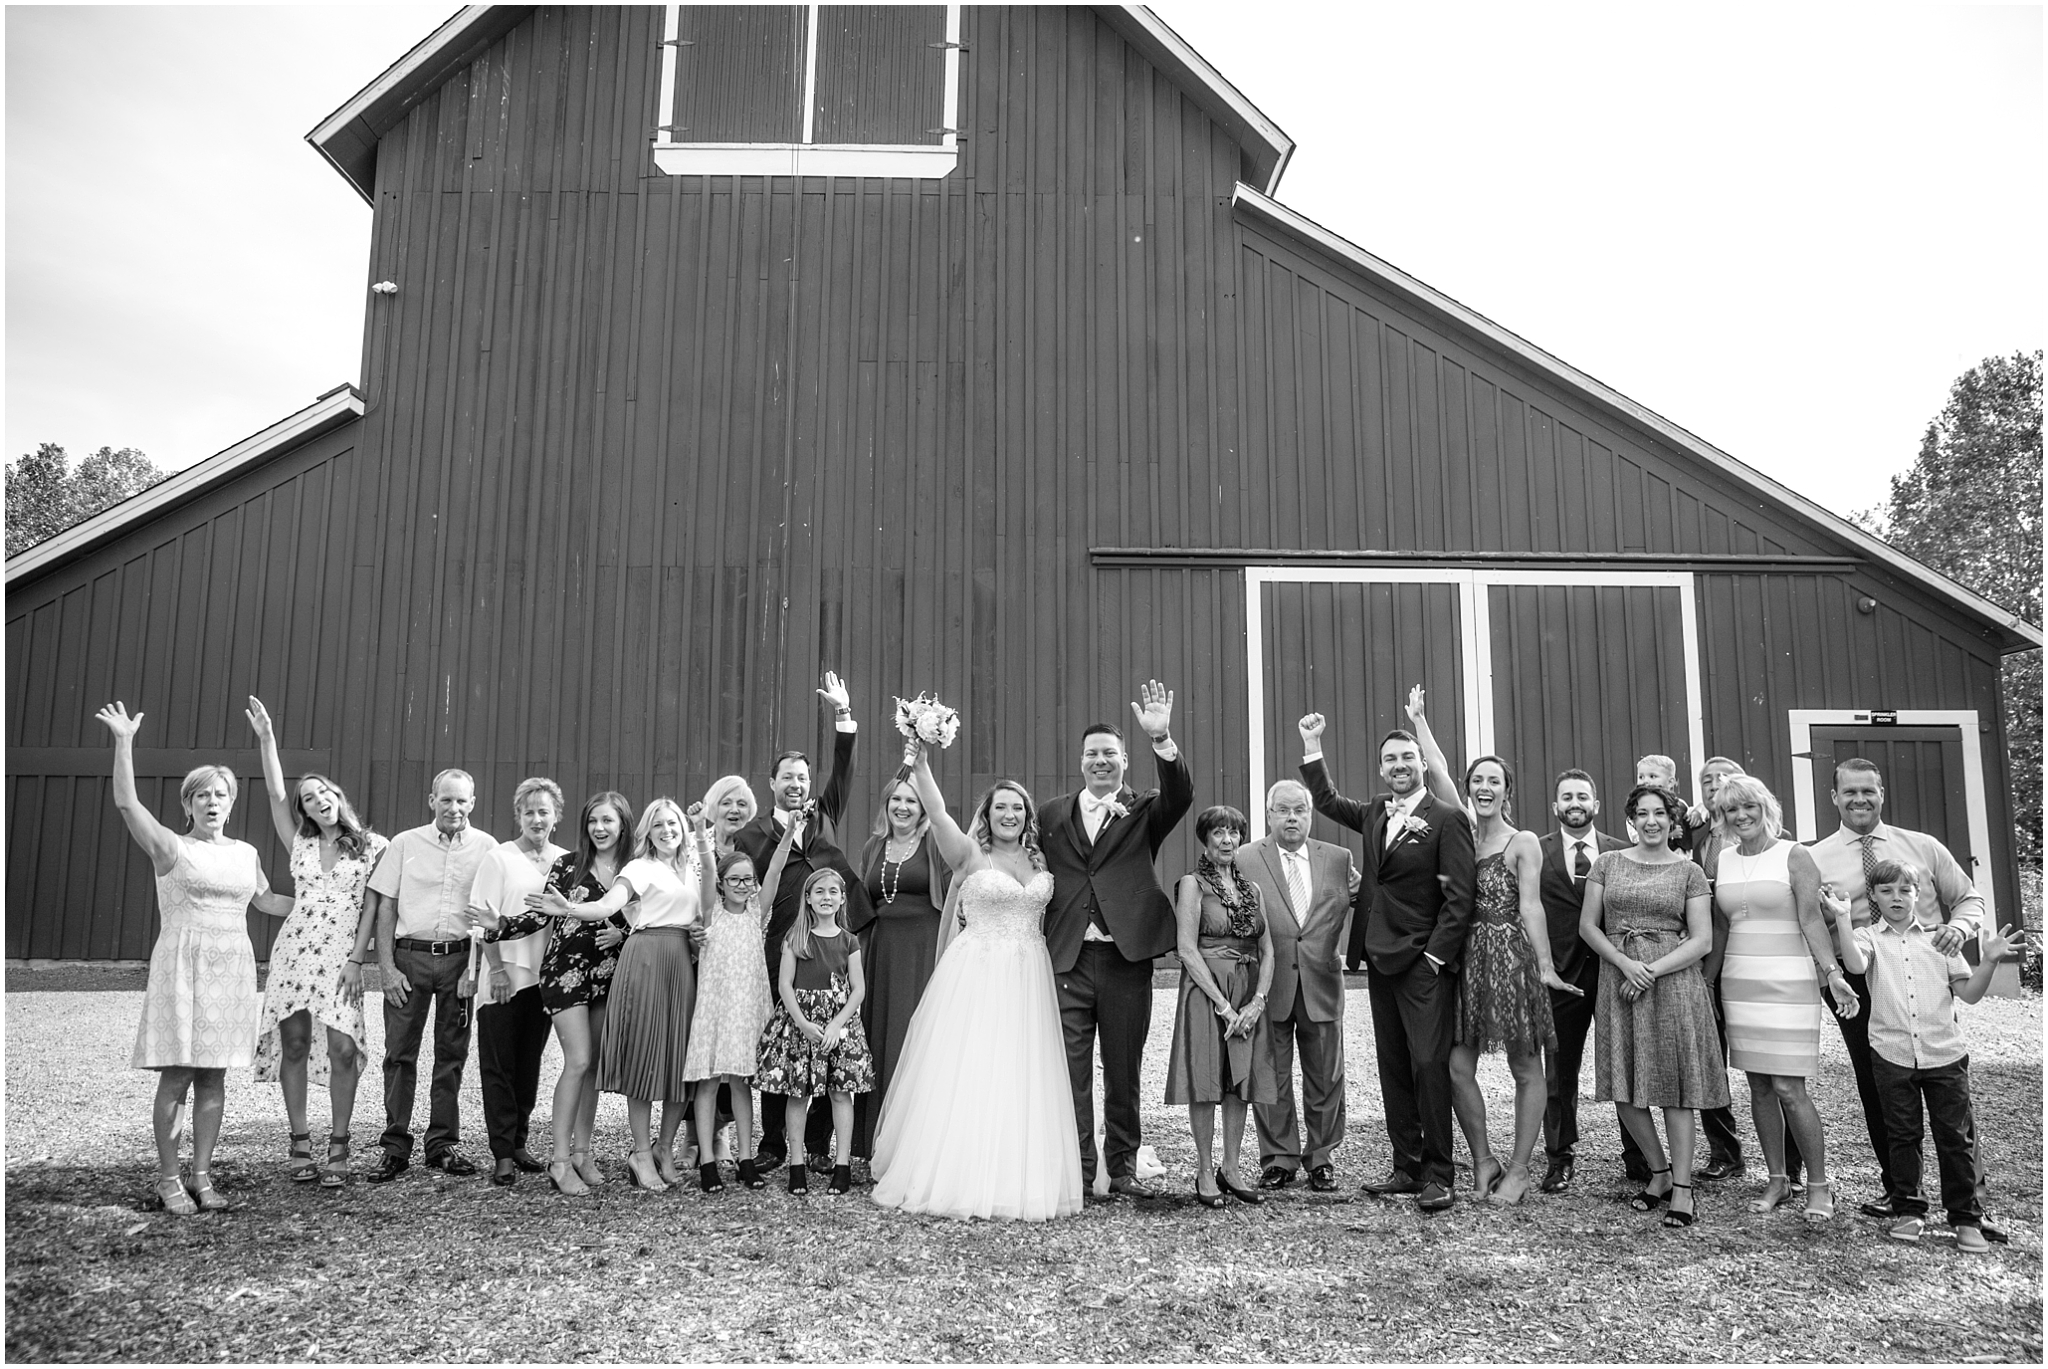 Family portraits at Pickering Barn wedding in Issaquah Washington